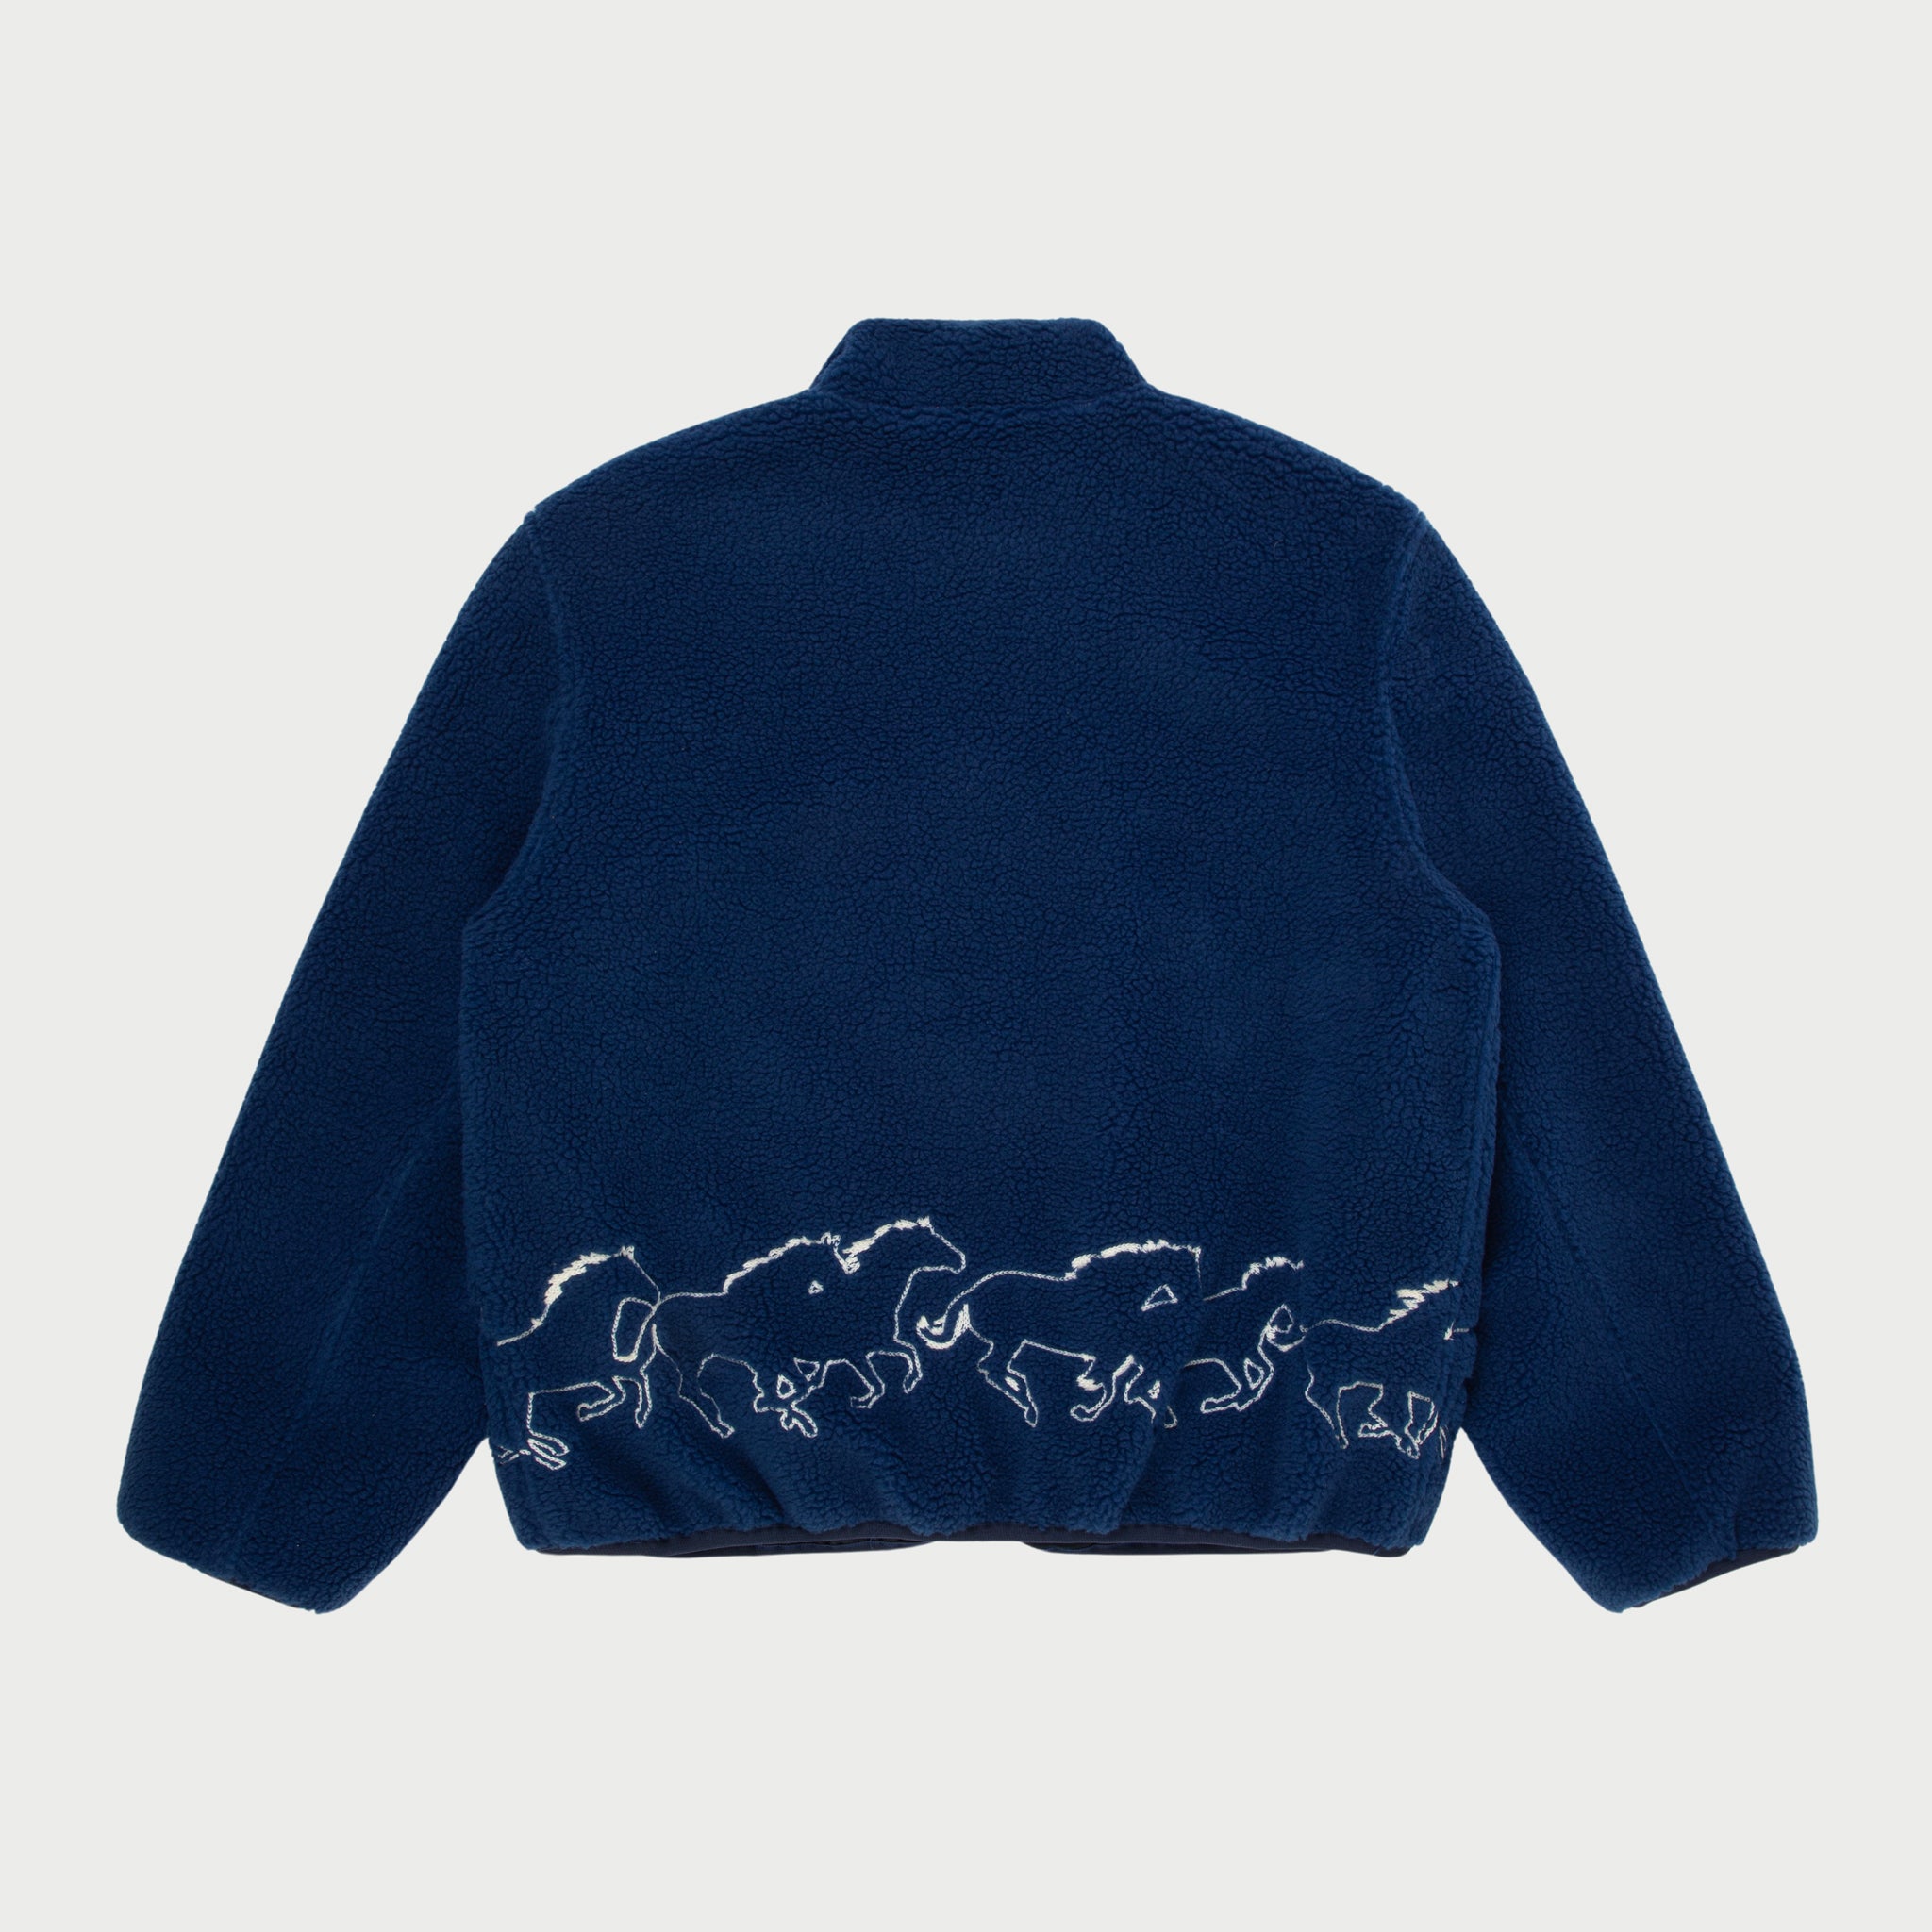 Embroidered Sherpa Jacket (Royal)